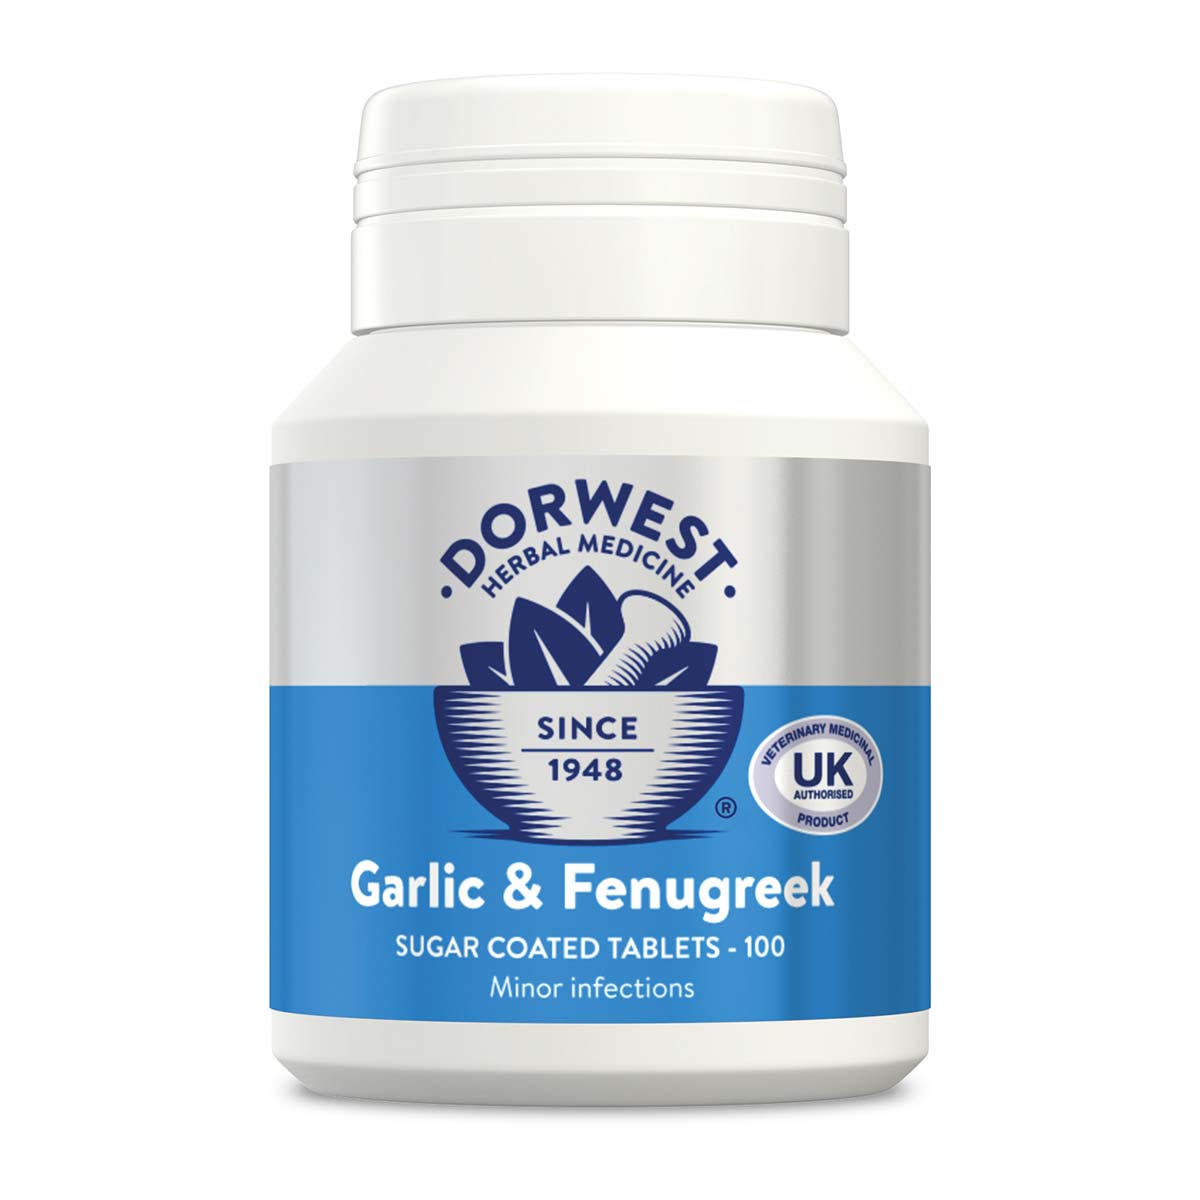 Dorwest Garlic and Fenugreek Tablets for Dogs